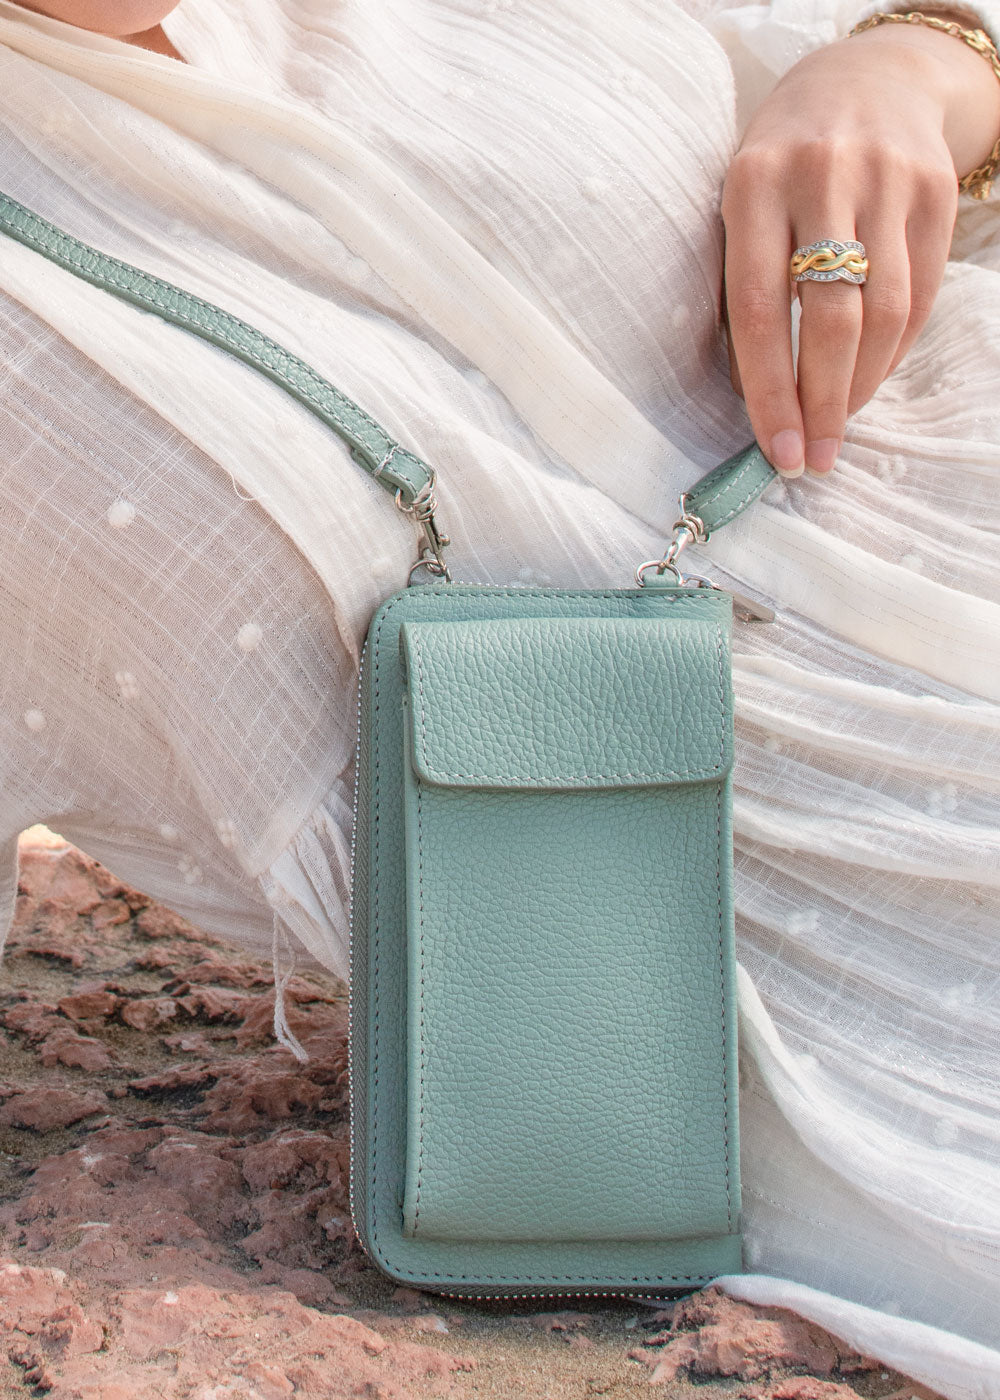 Women Crossbody Purse - Convertible Green-Mint Leather Wallet Bag